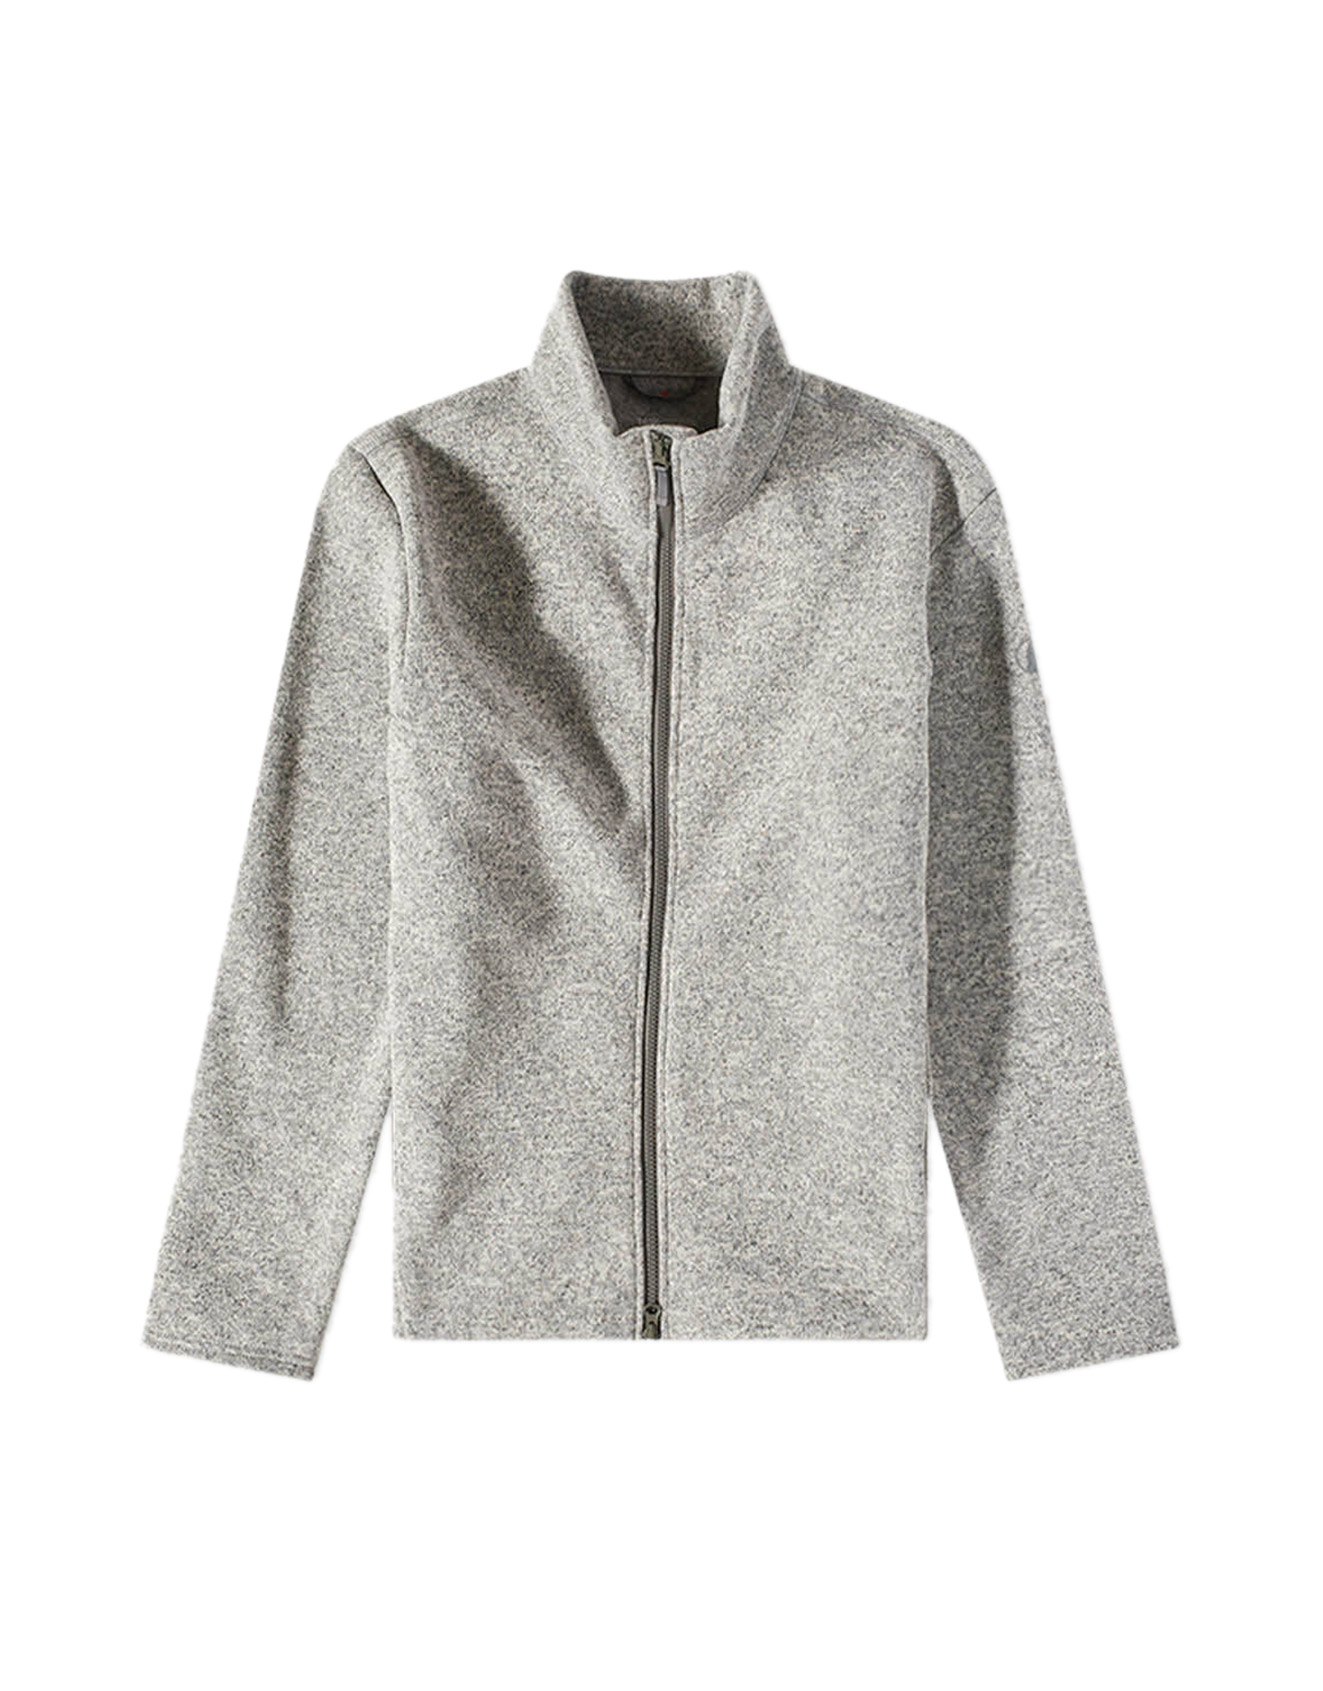 TILAK – Poutnik Monk Zip Fleece Jacket